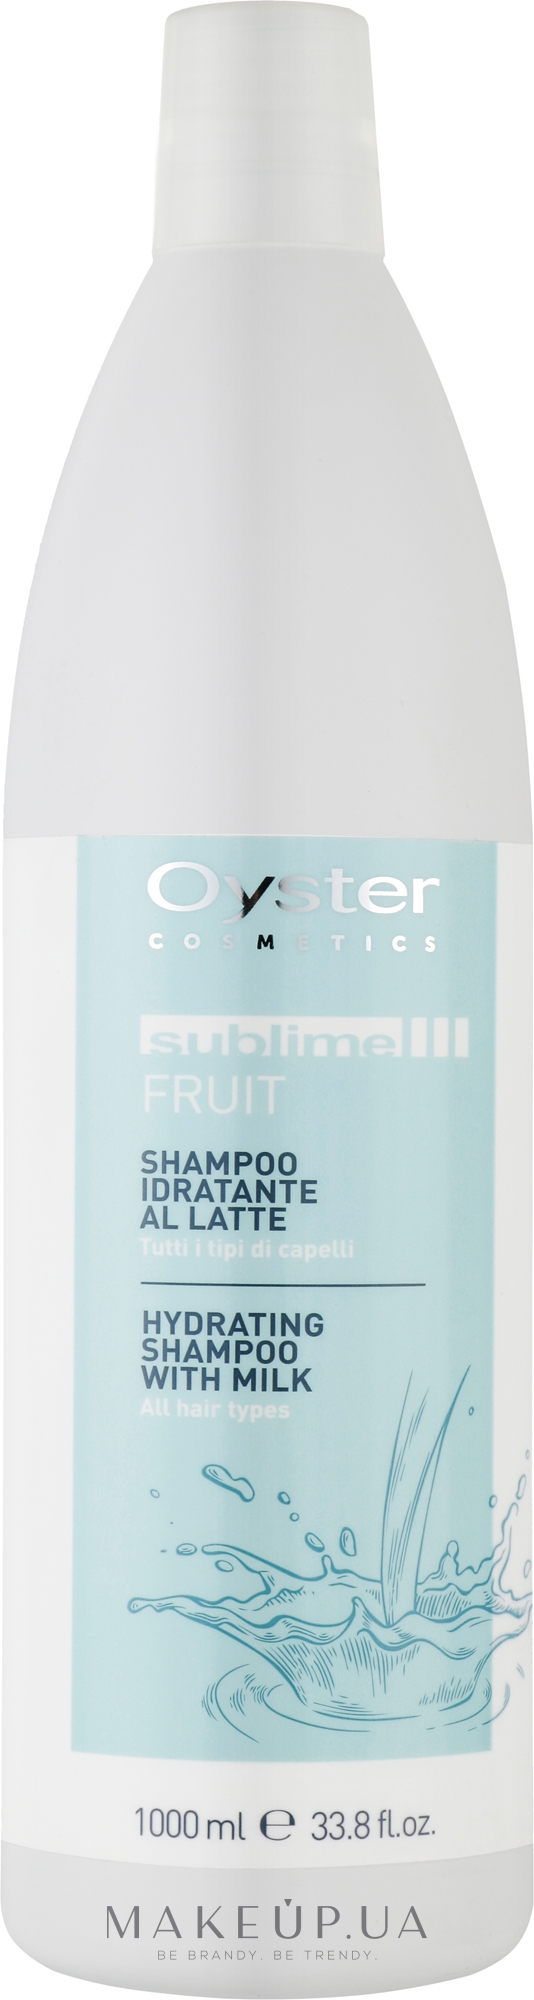 Увлажняющий шампунь для волос с молочными протеинами - Oyster Cosmetics Sublime Fruit Hydrating Shampoo Whith Milk — фото 1000ml